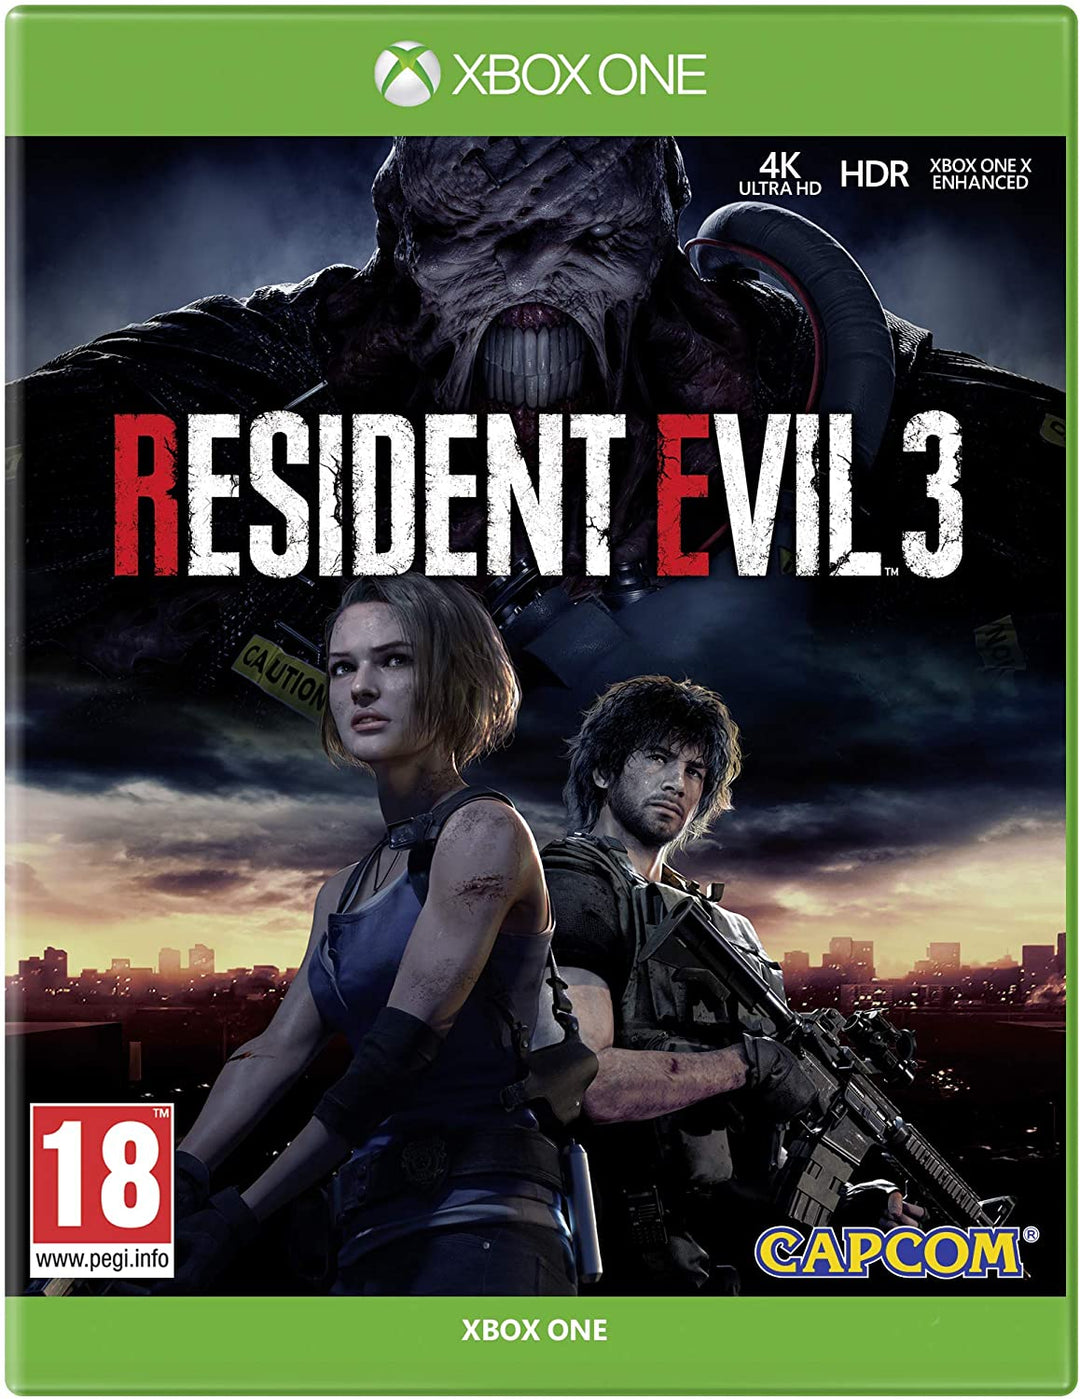 Resident Evil 3 Remake (Xbox One)